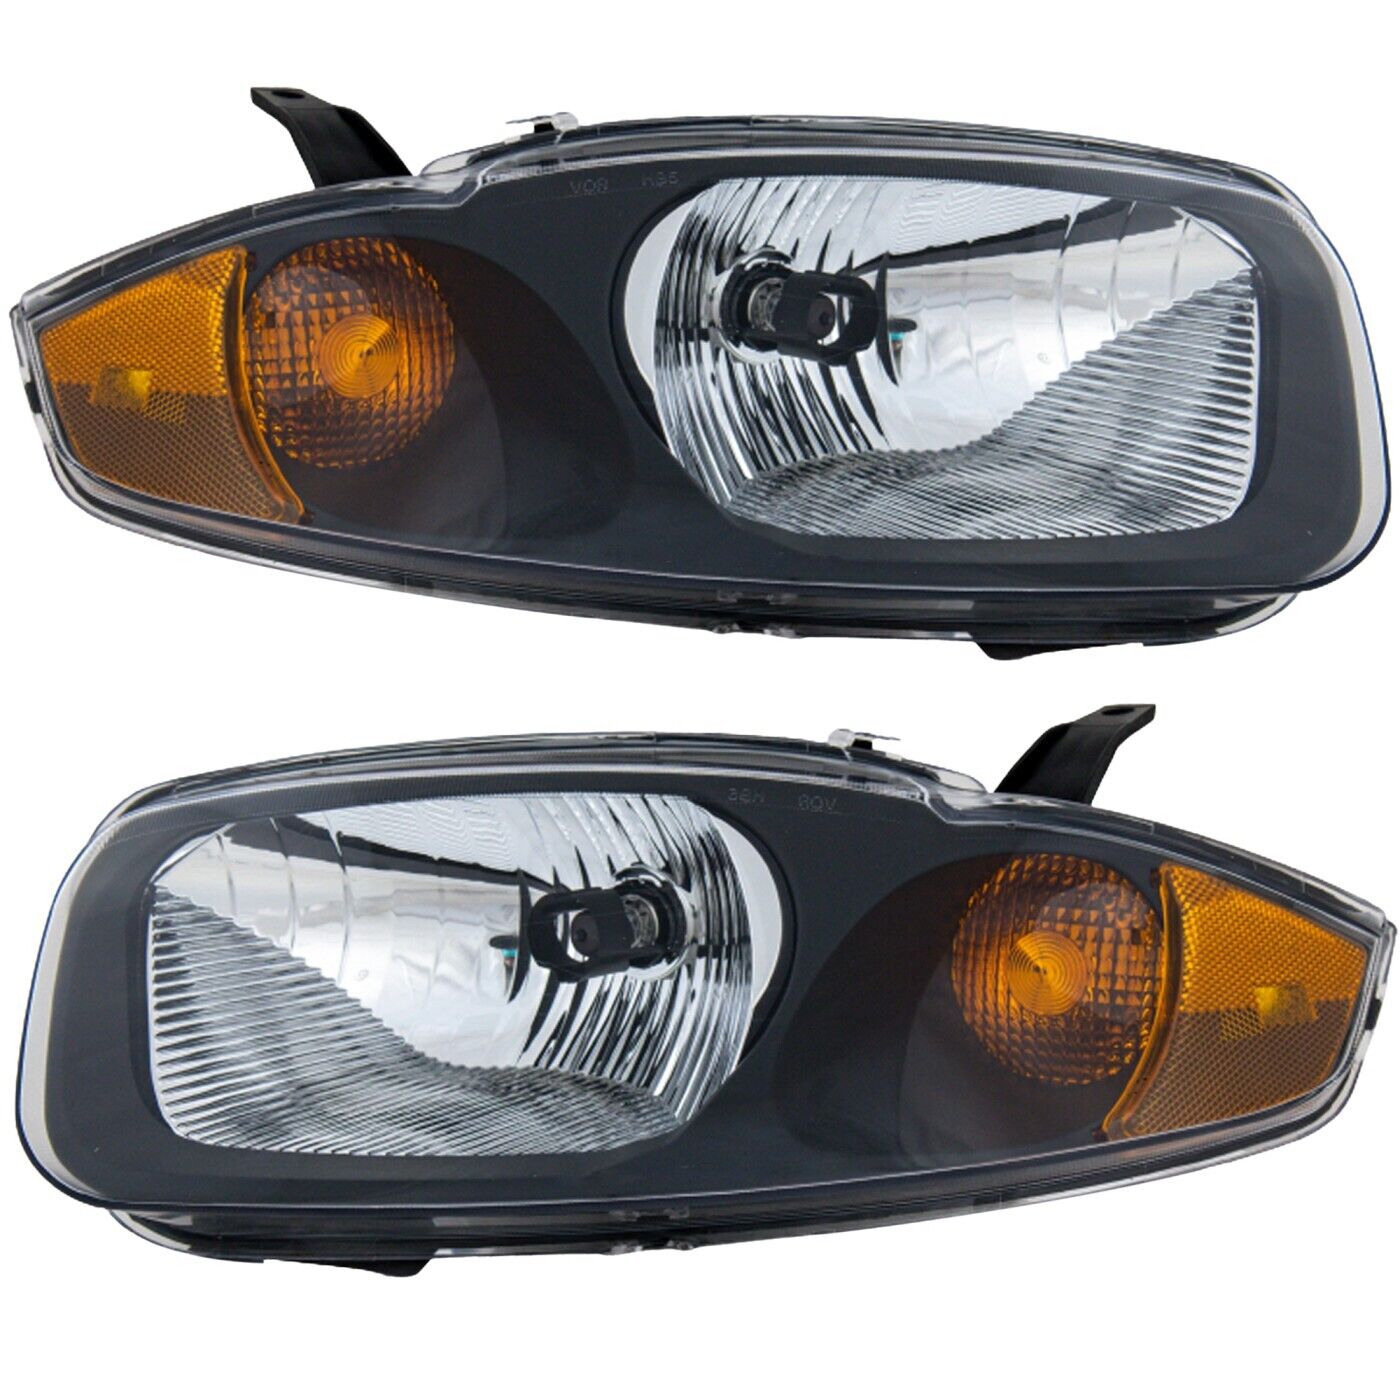 Halogen Headlight Set For 2003-2005 Chevy Cavalier Left & Right w/ Bulb(s) Pair